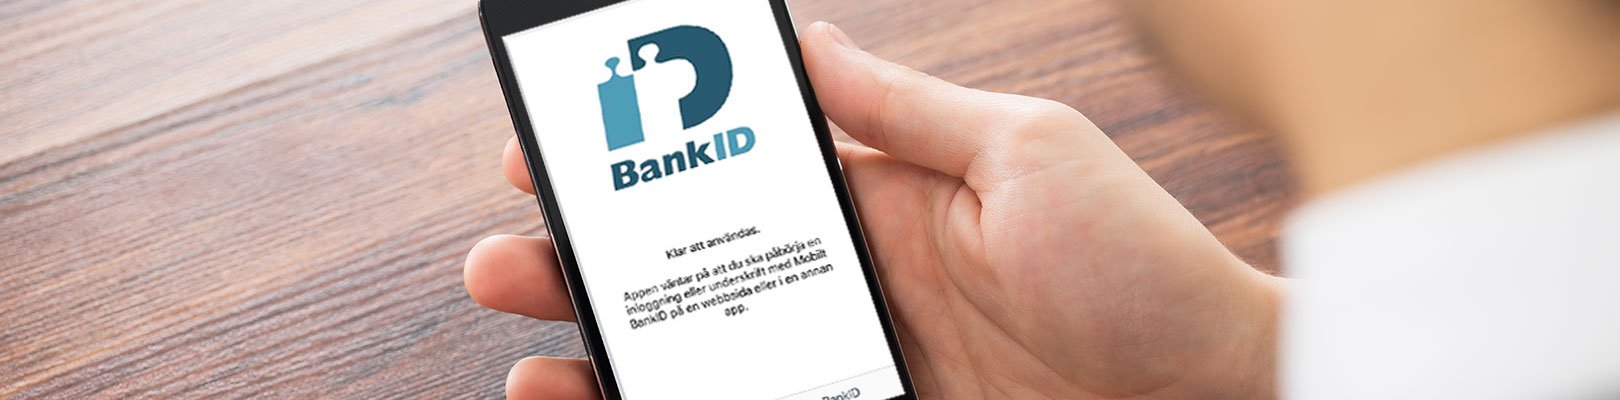 Registrering via BankID